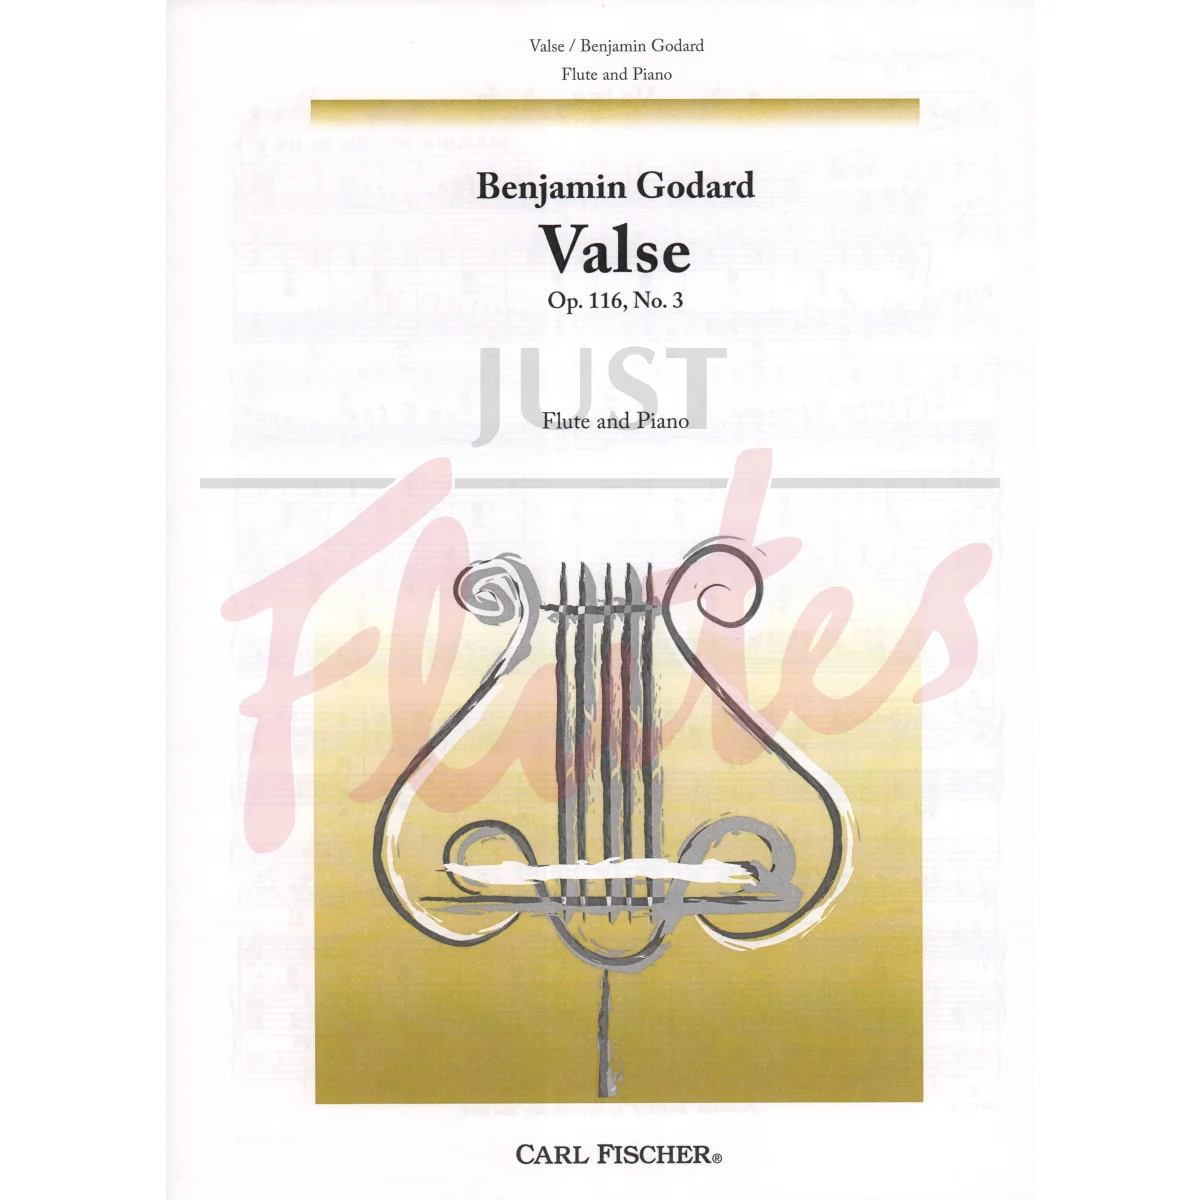 Valse No.3 for Flute and Piano